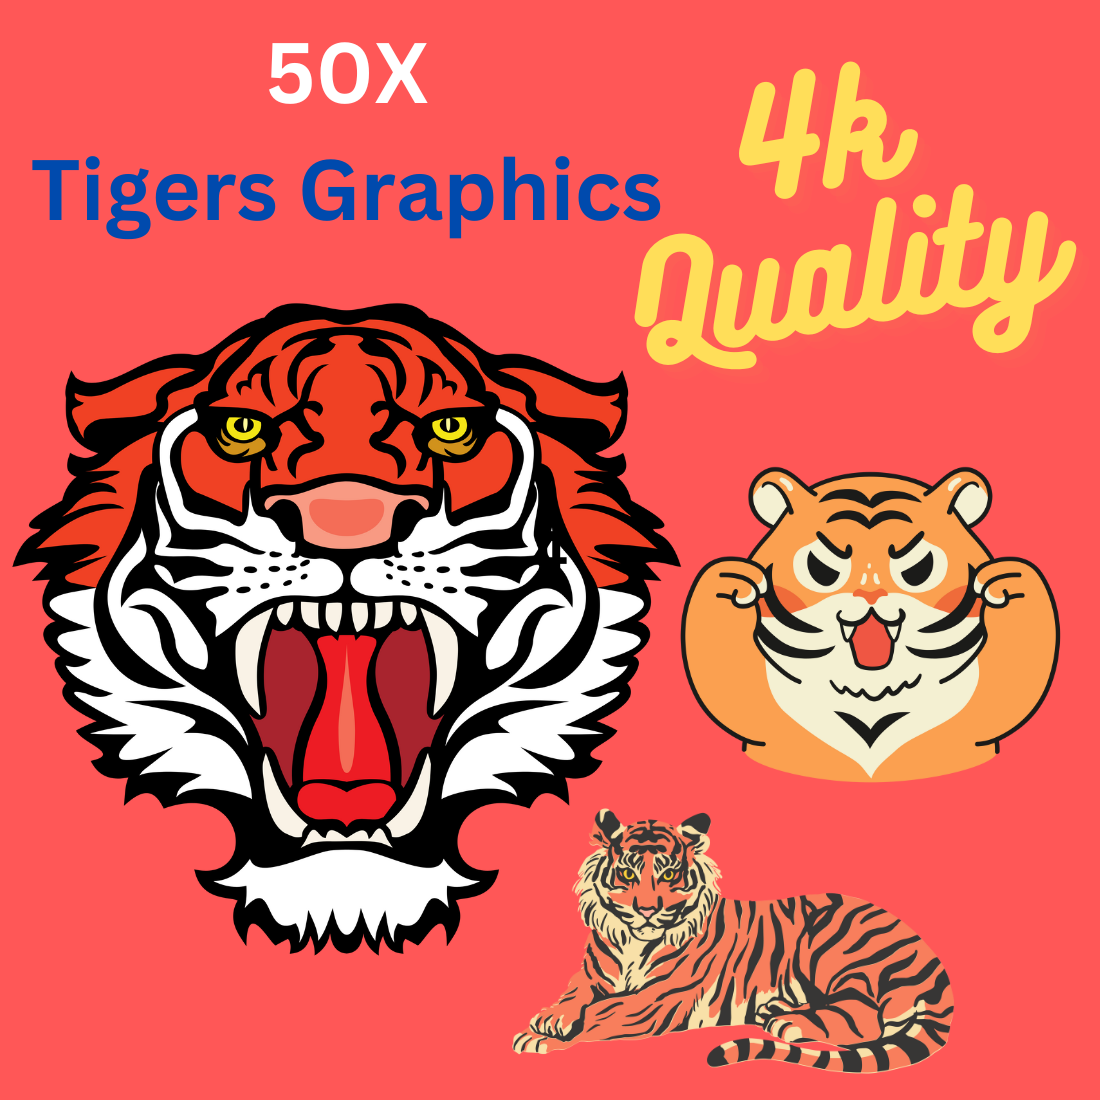 Cute Tiger Graphics Design cover image.